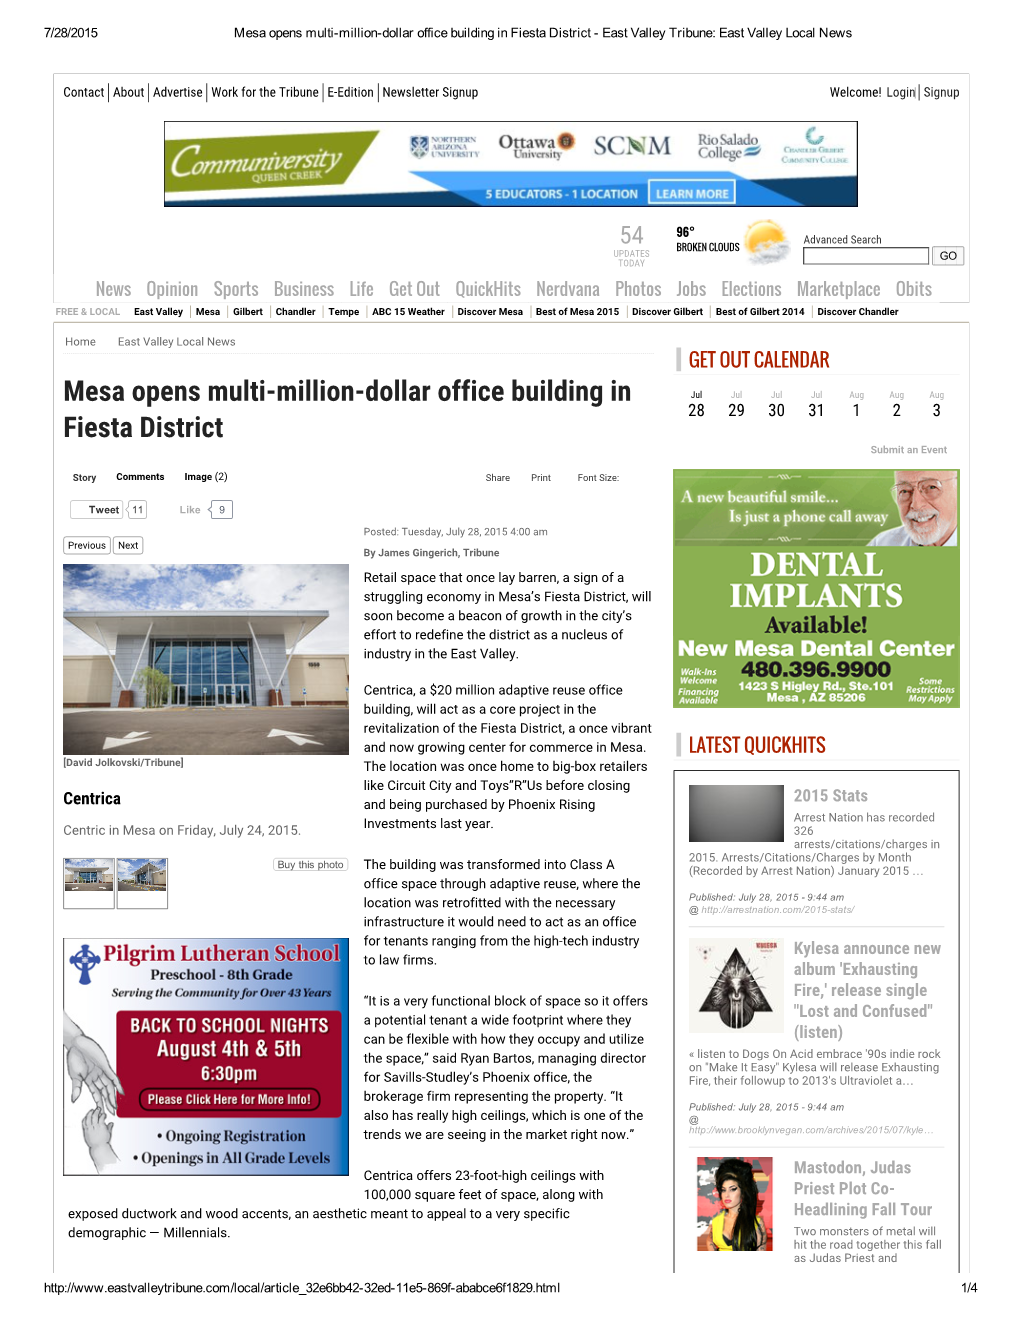 Mesa Opens Multi-Million-Dollar Office Building in Fiesta District